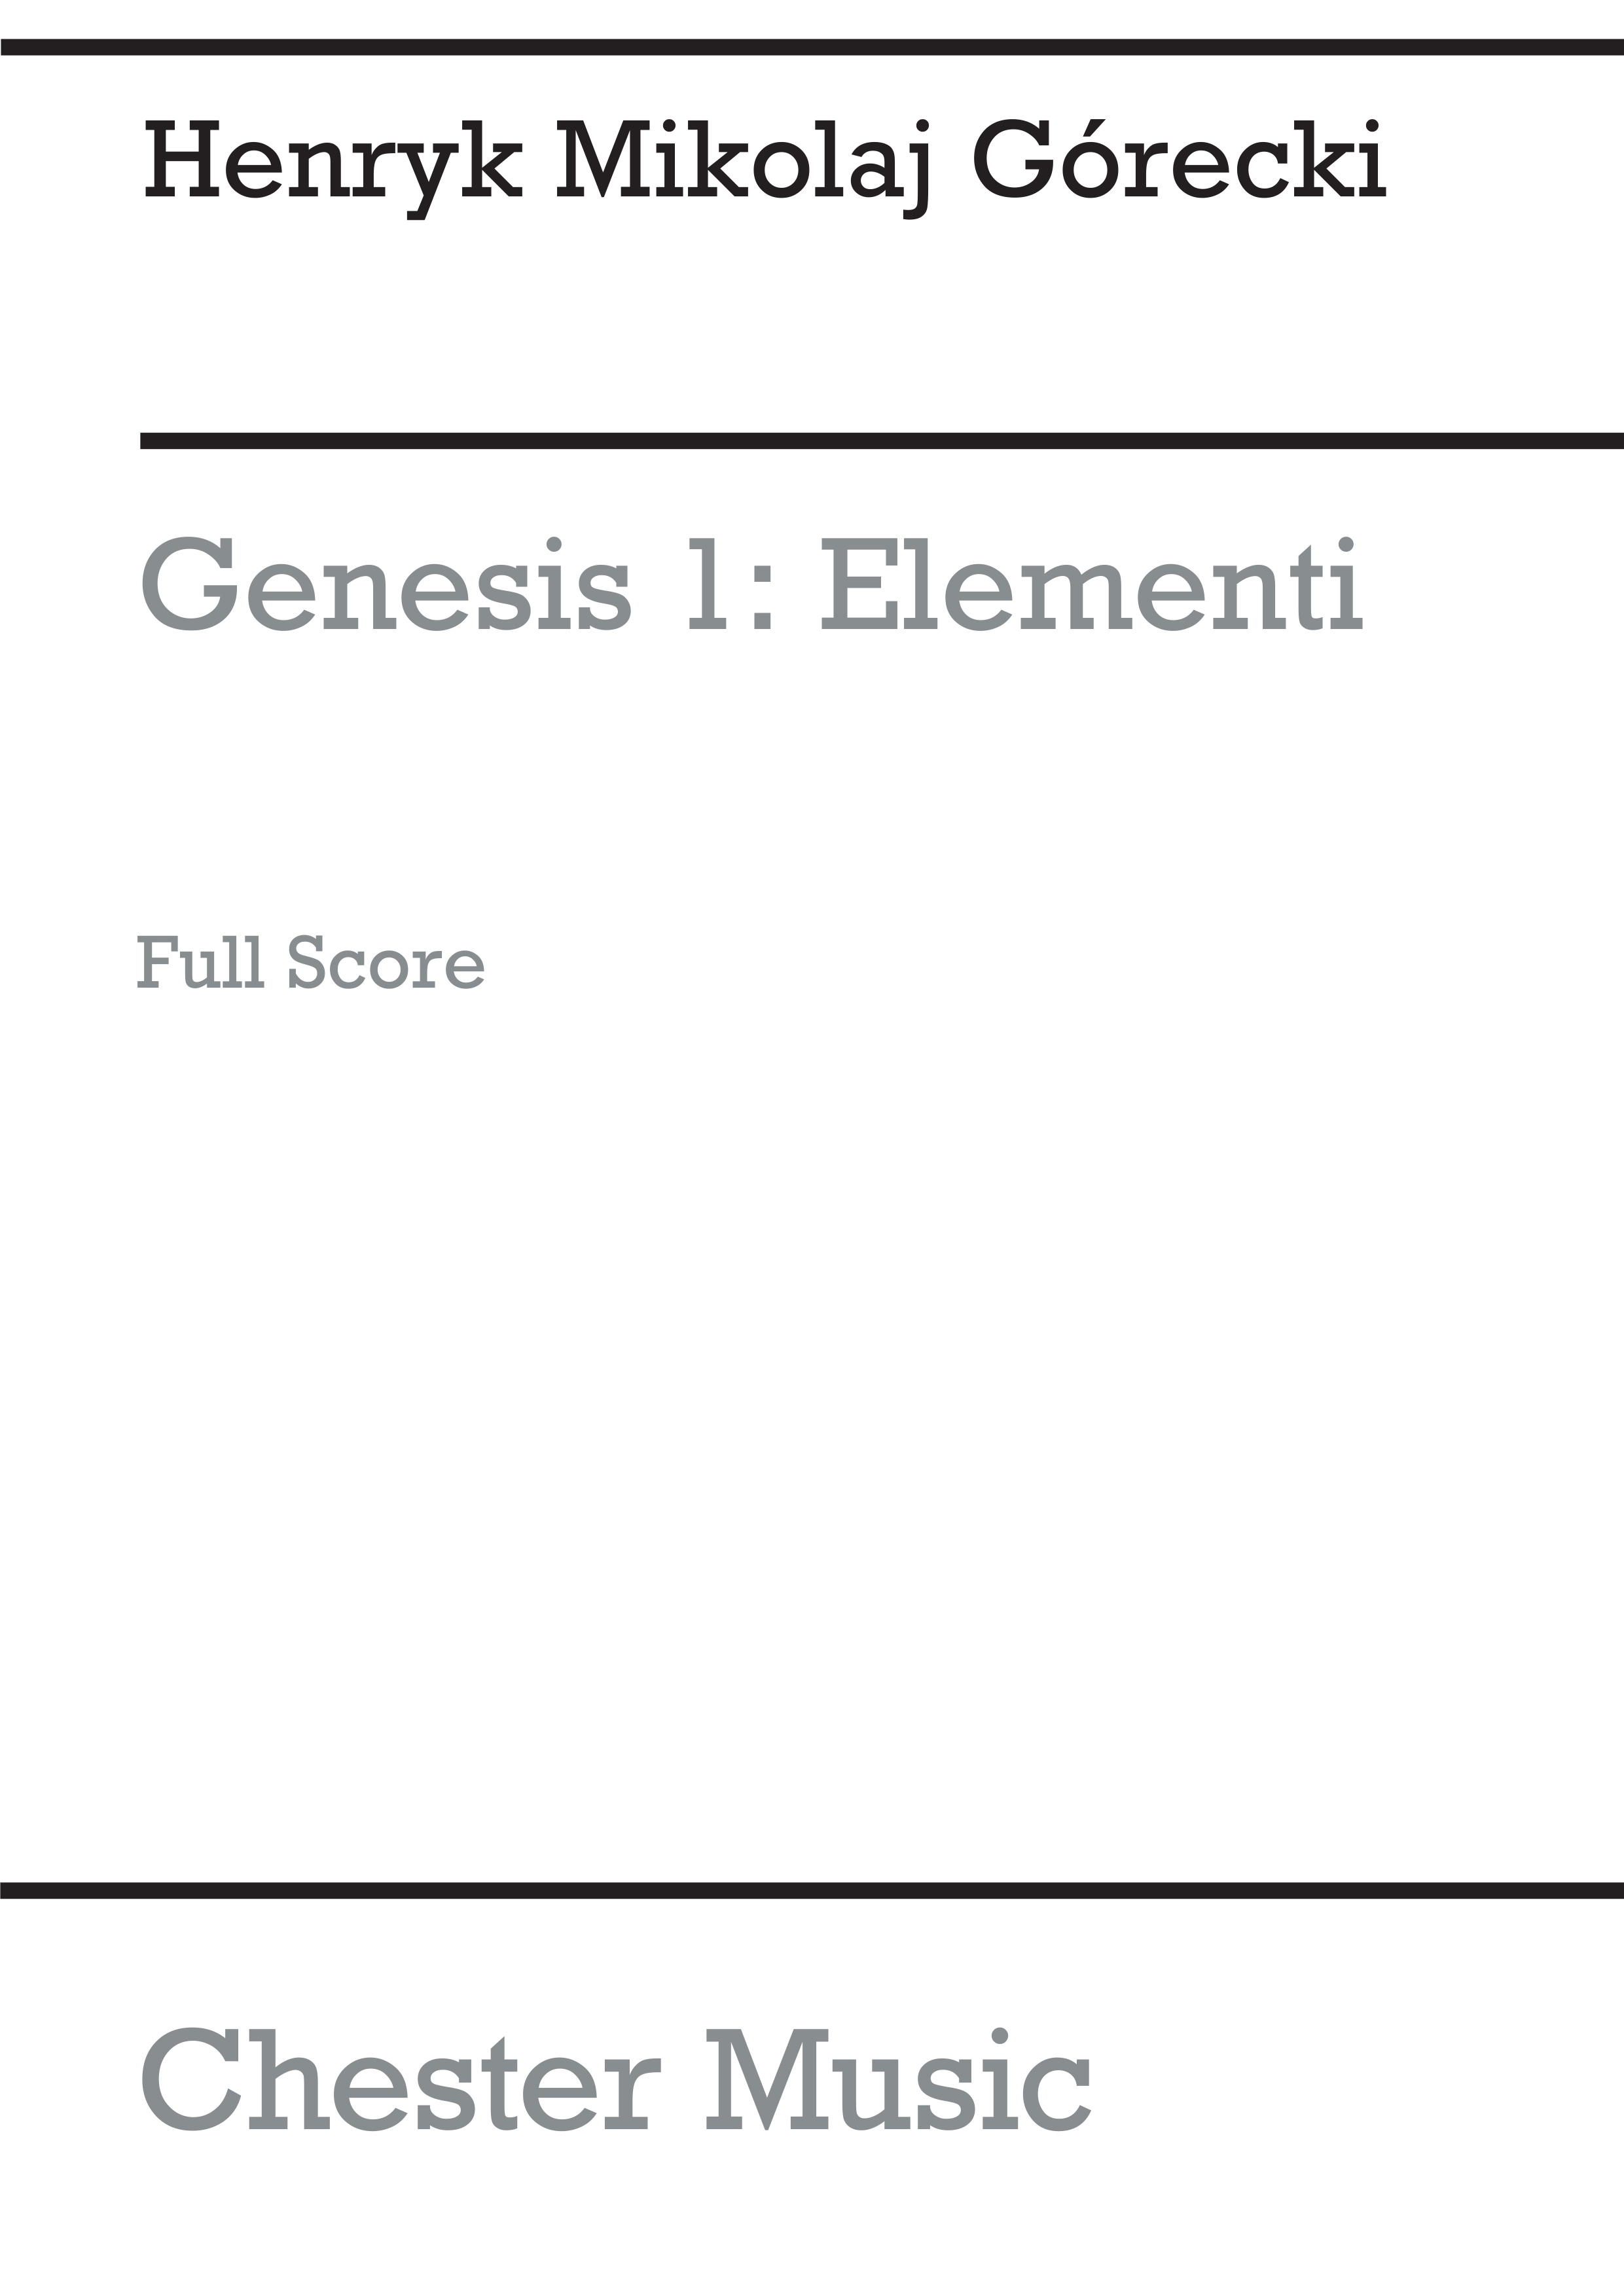 Henryk Mikolaj Górecki: Genesis 1 - Elementi Op.19 No.1 (Full Score): String